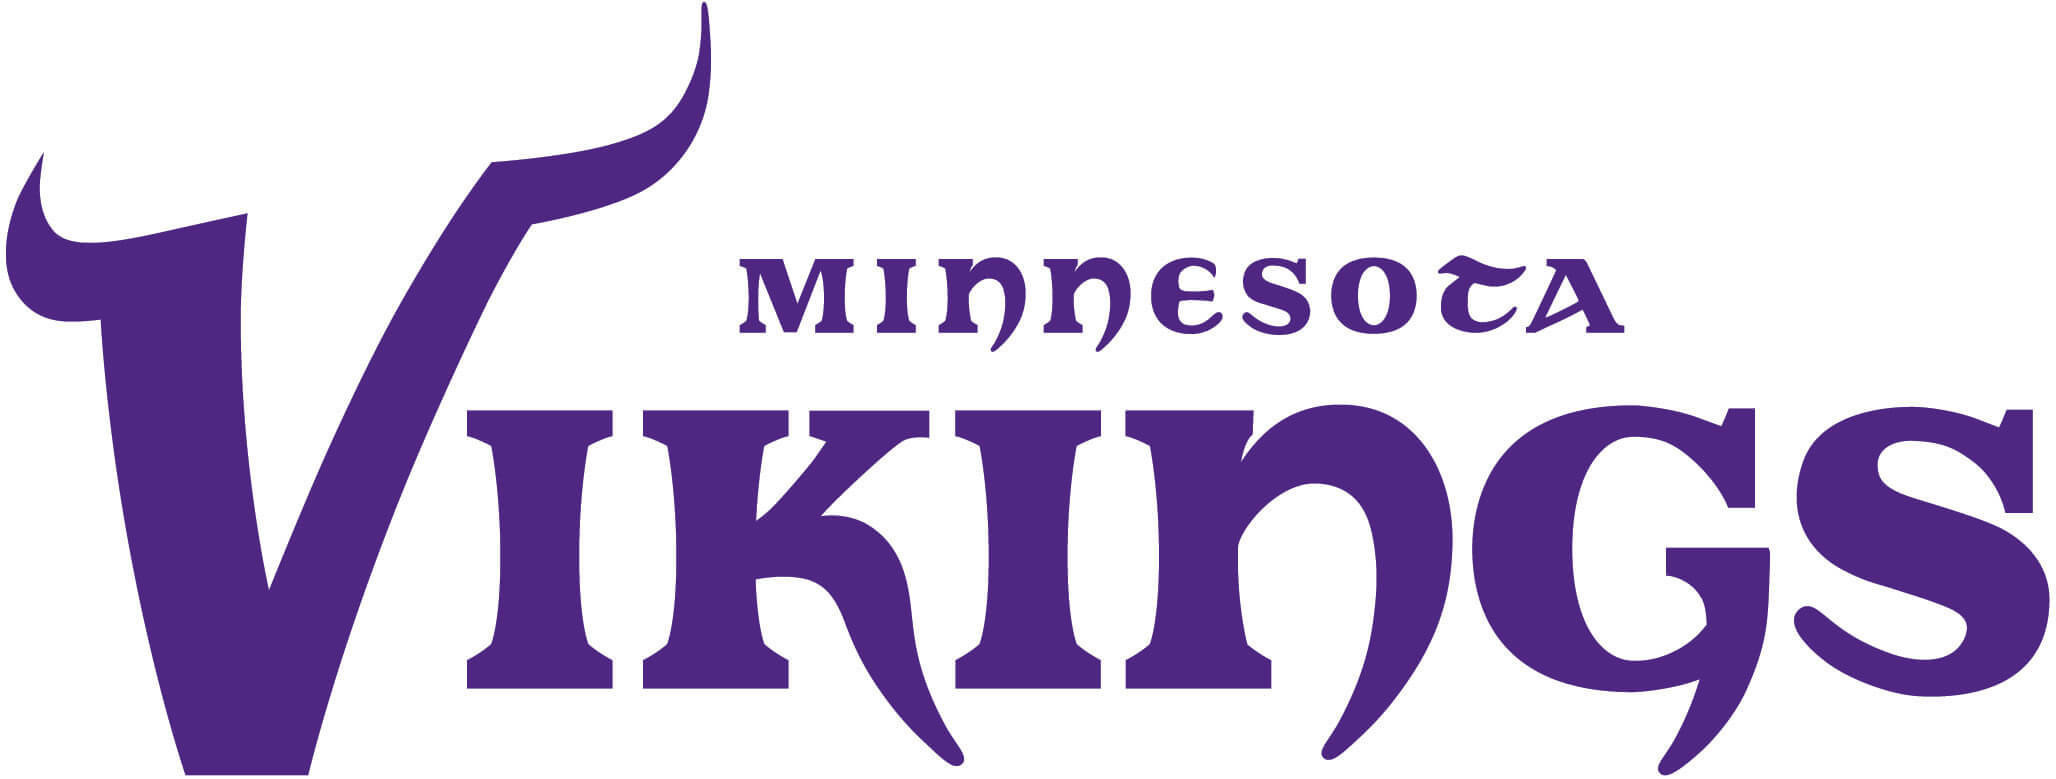 minnesota vikings logo